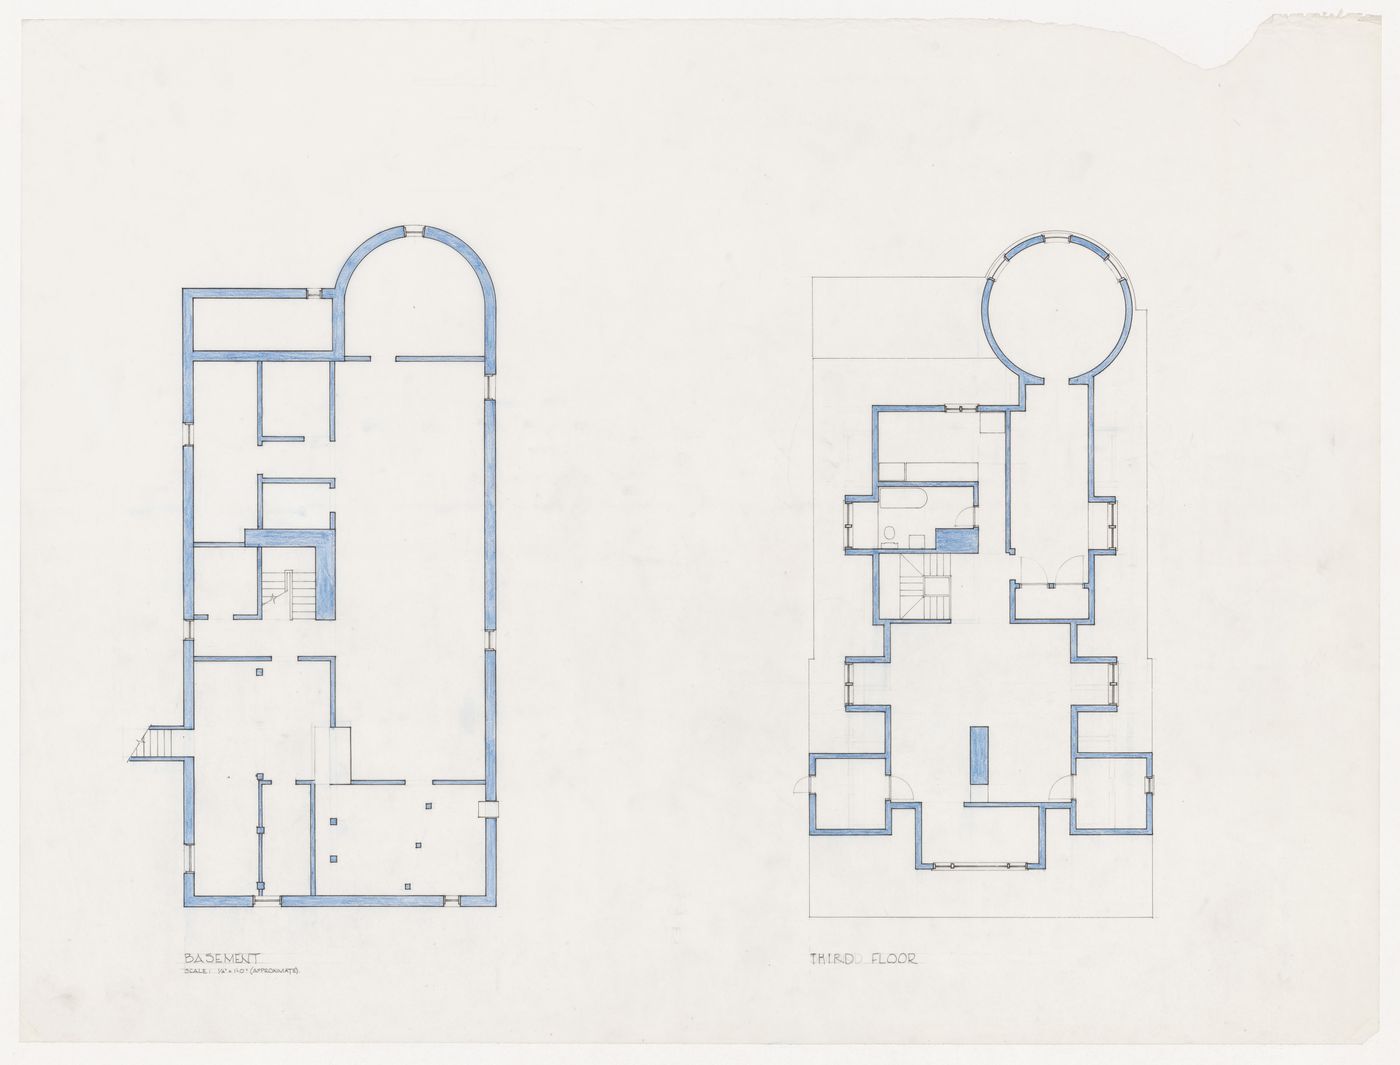 Basement and third floor plans for Van Ginkel House, Winnipeg, Manitoba